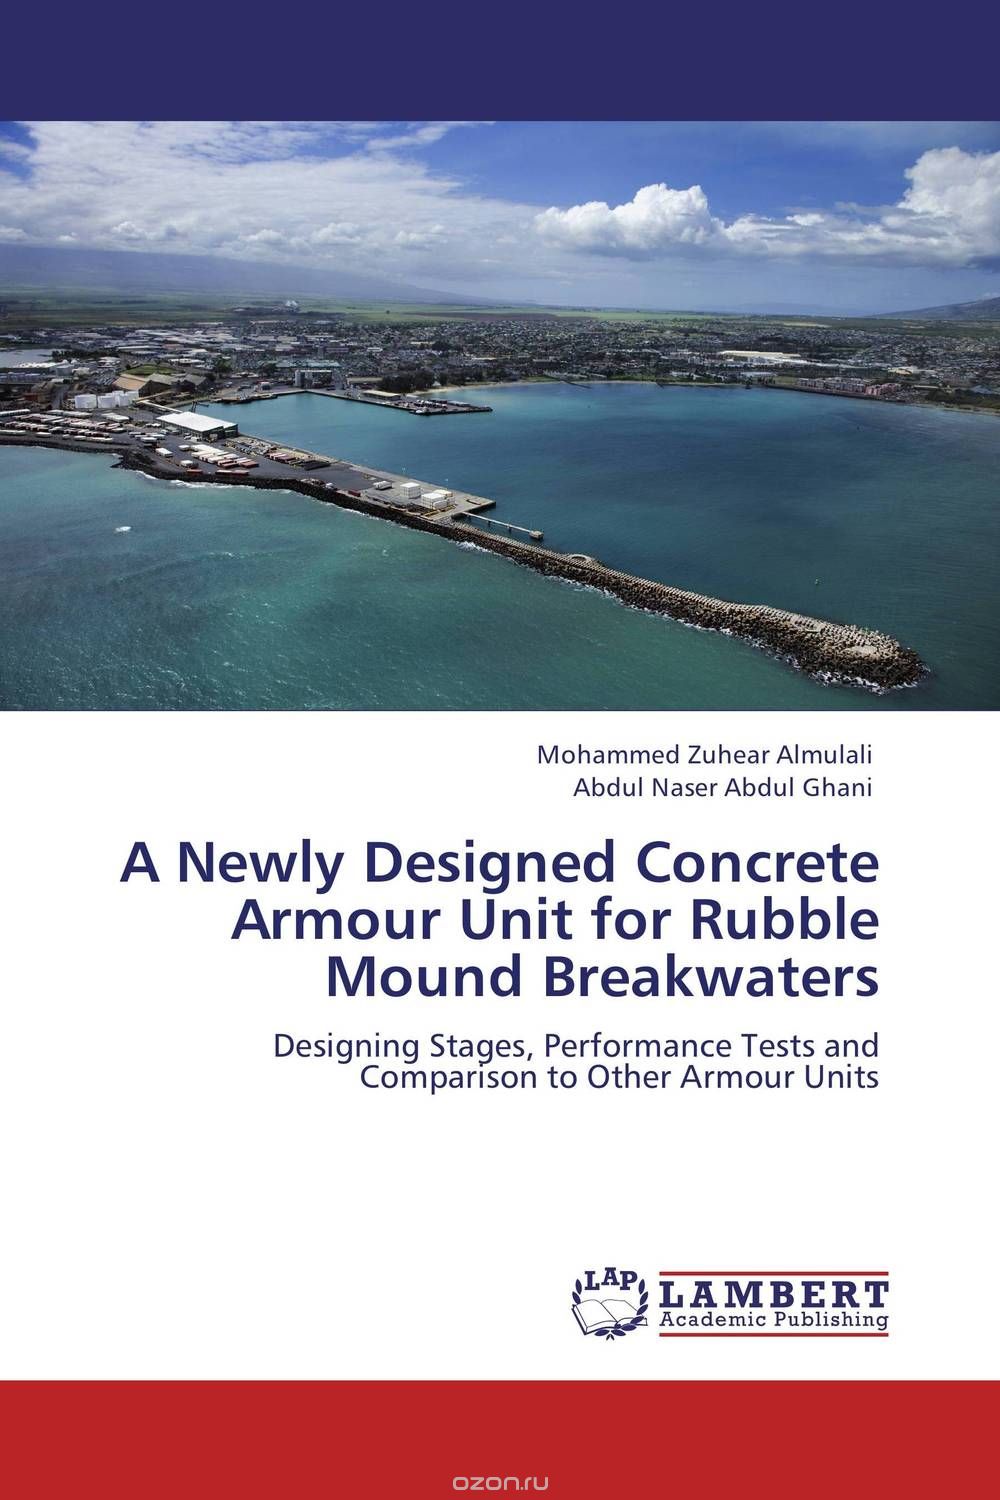 Скачать книгу "A Newly Designed Concrete Armour Unit for Rubble Mound Breakwaters"